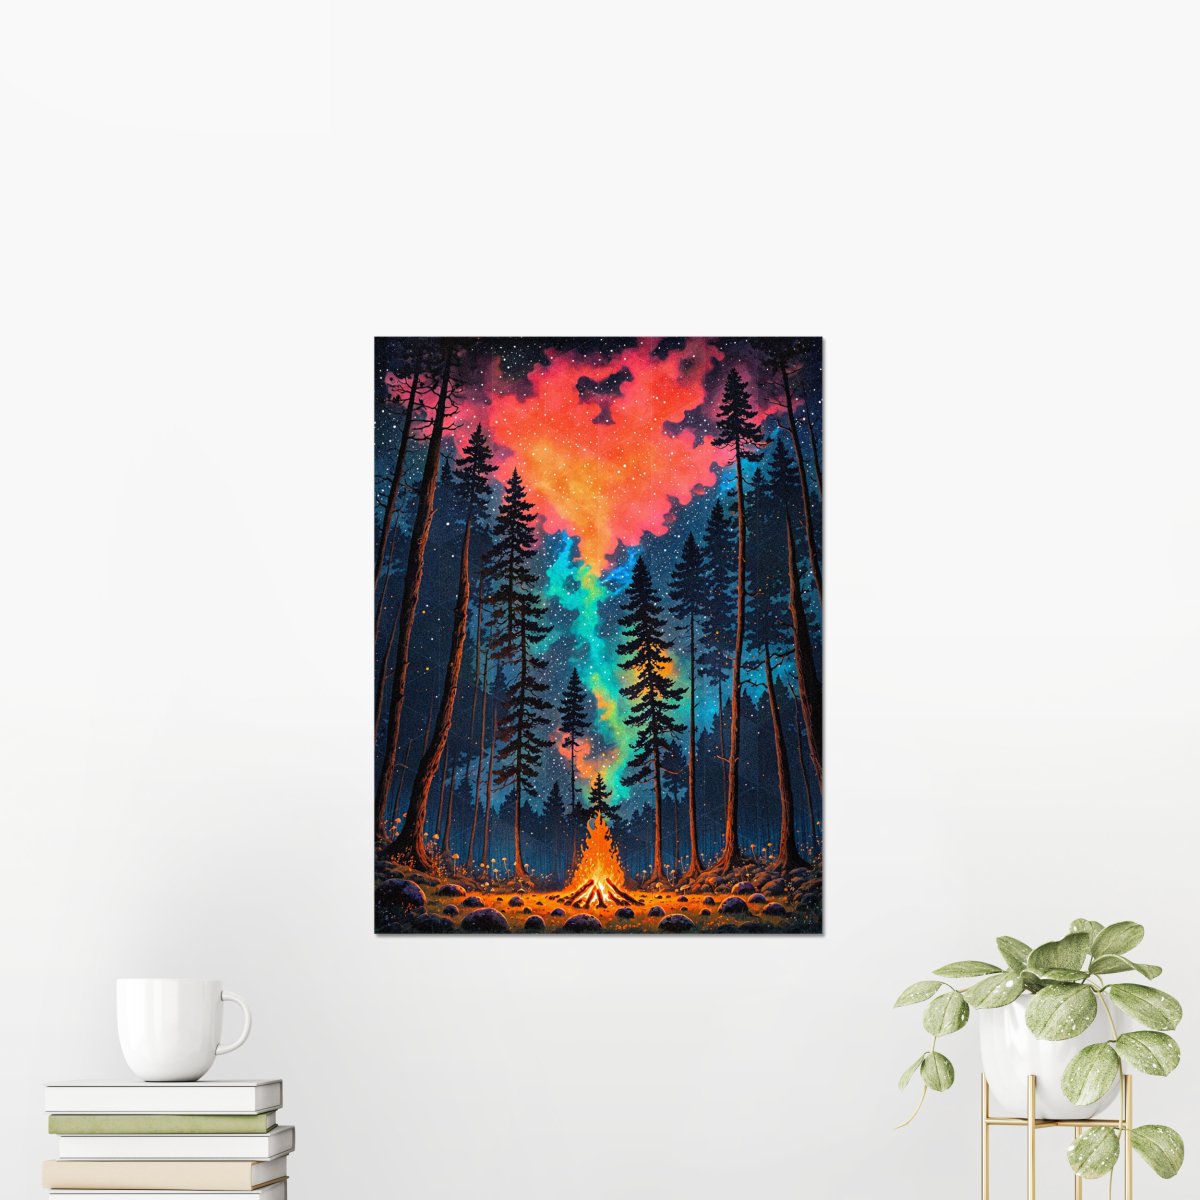 Bonfire night - Art print - Poster - Ever colorful